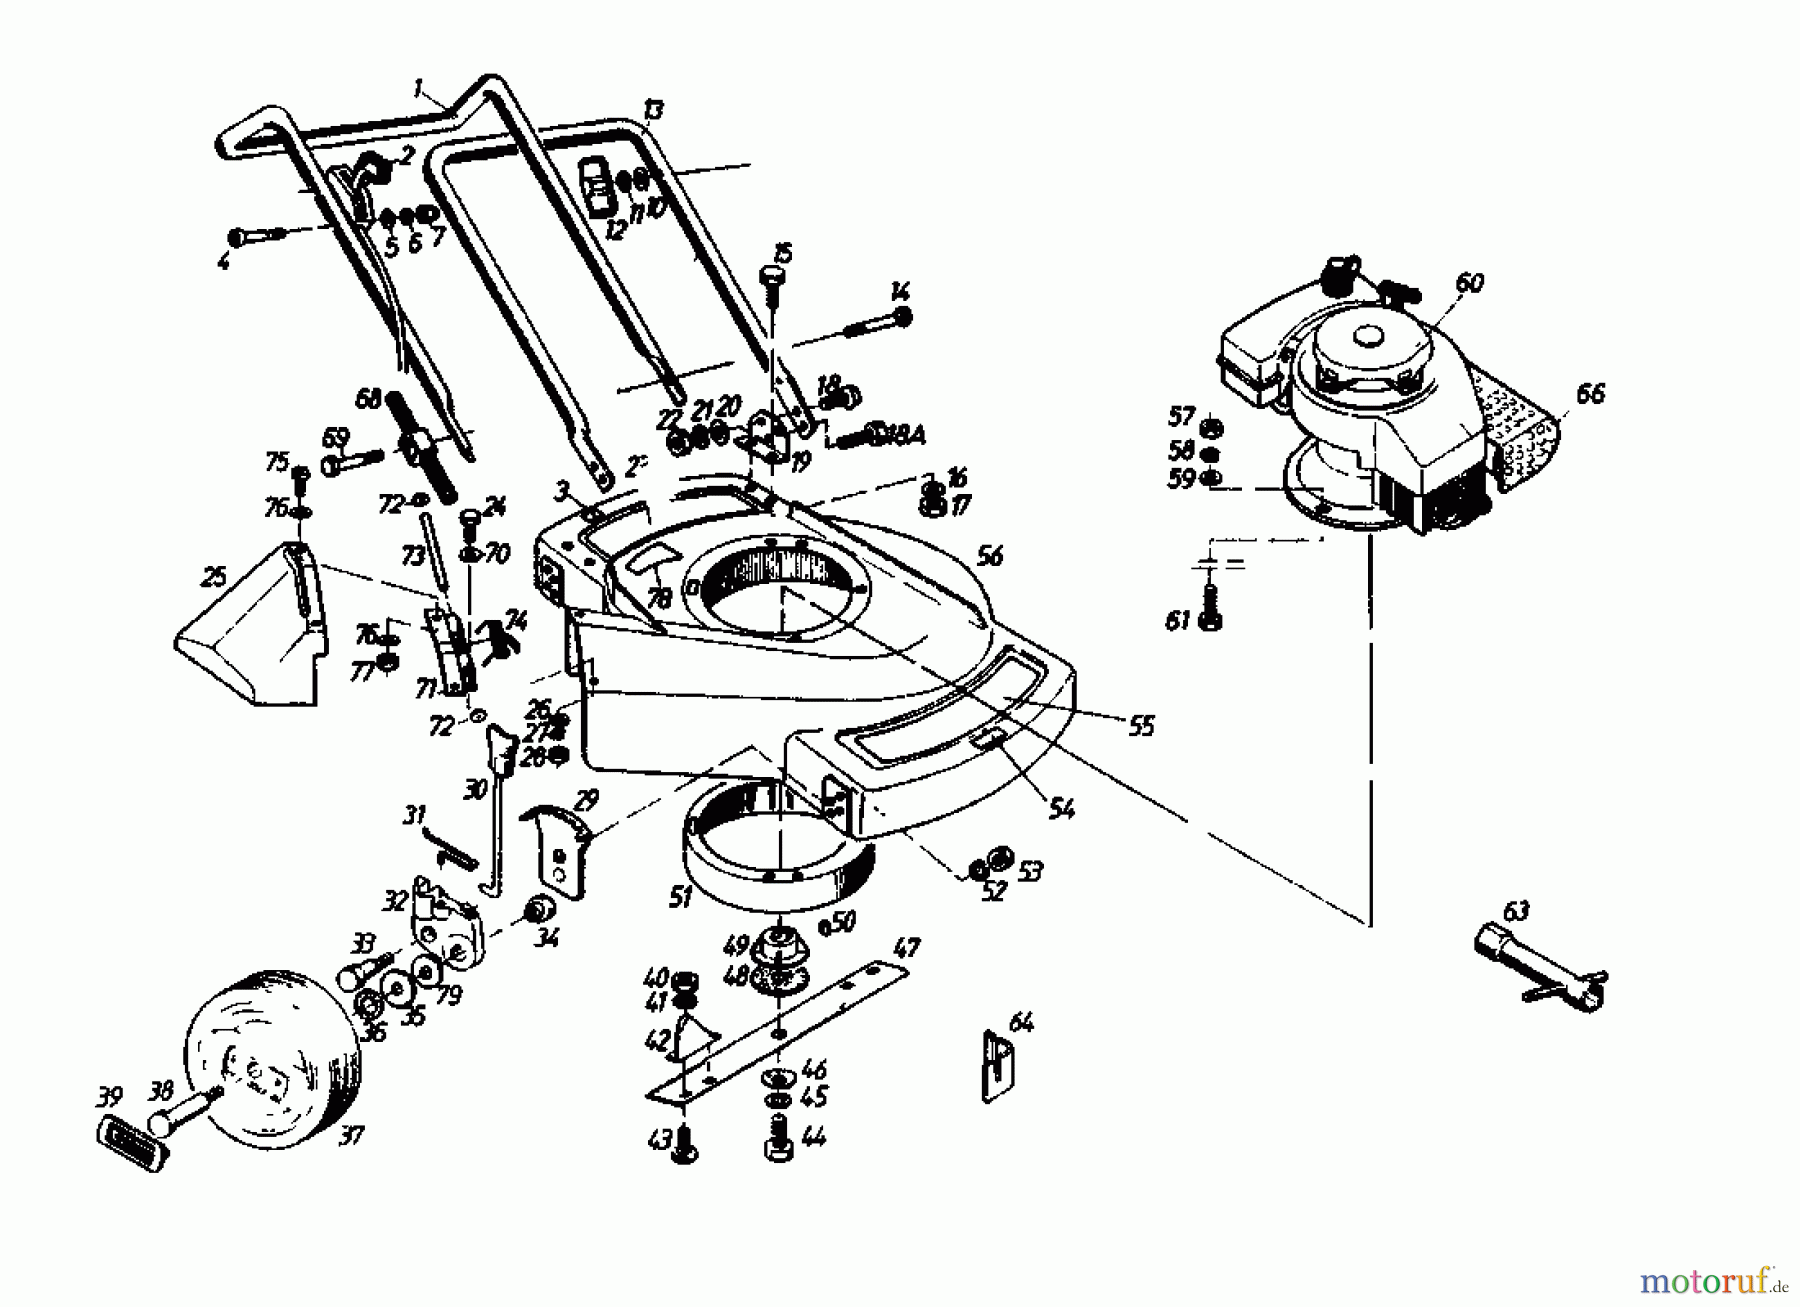  Gutbrod Motormäher 135 BL 2 T 02869.06  (1988) Grundgerät